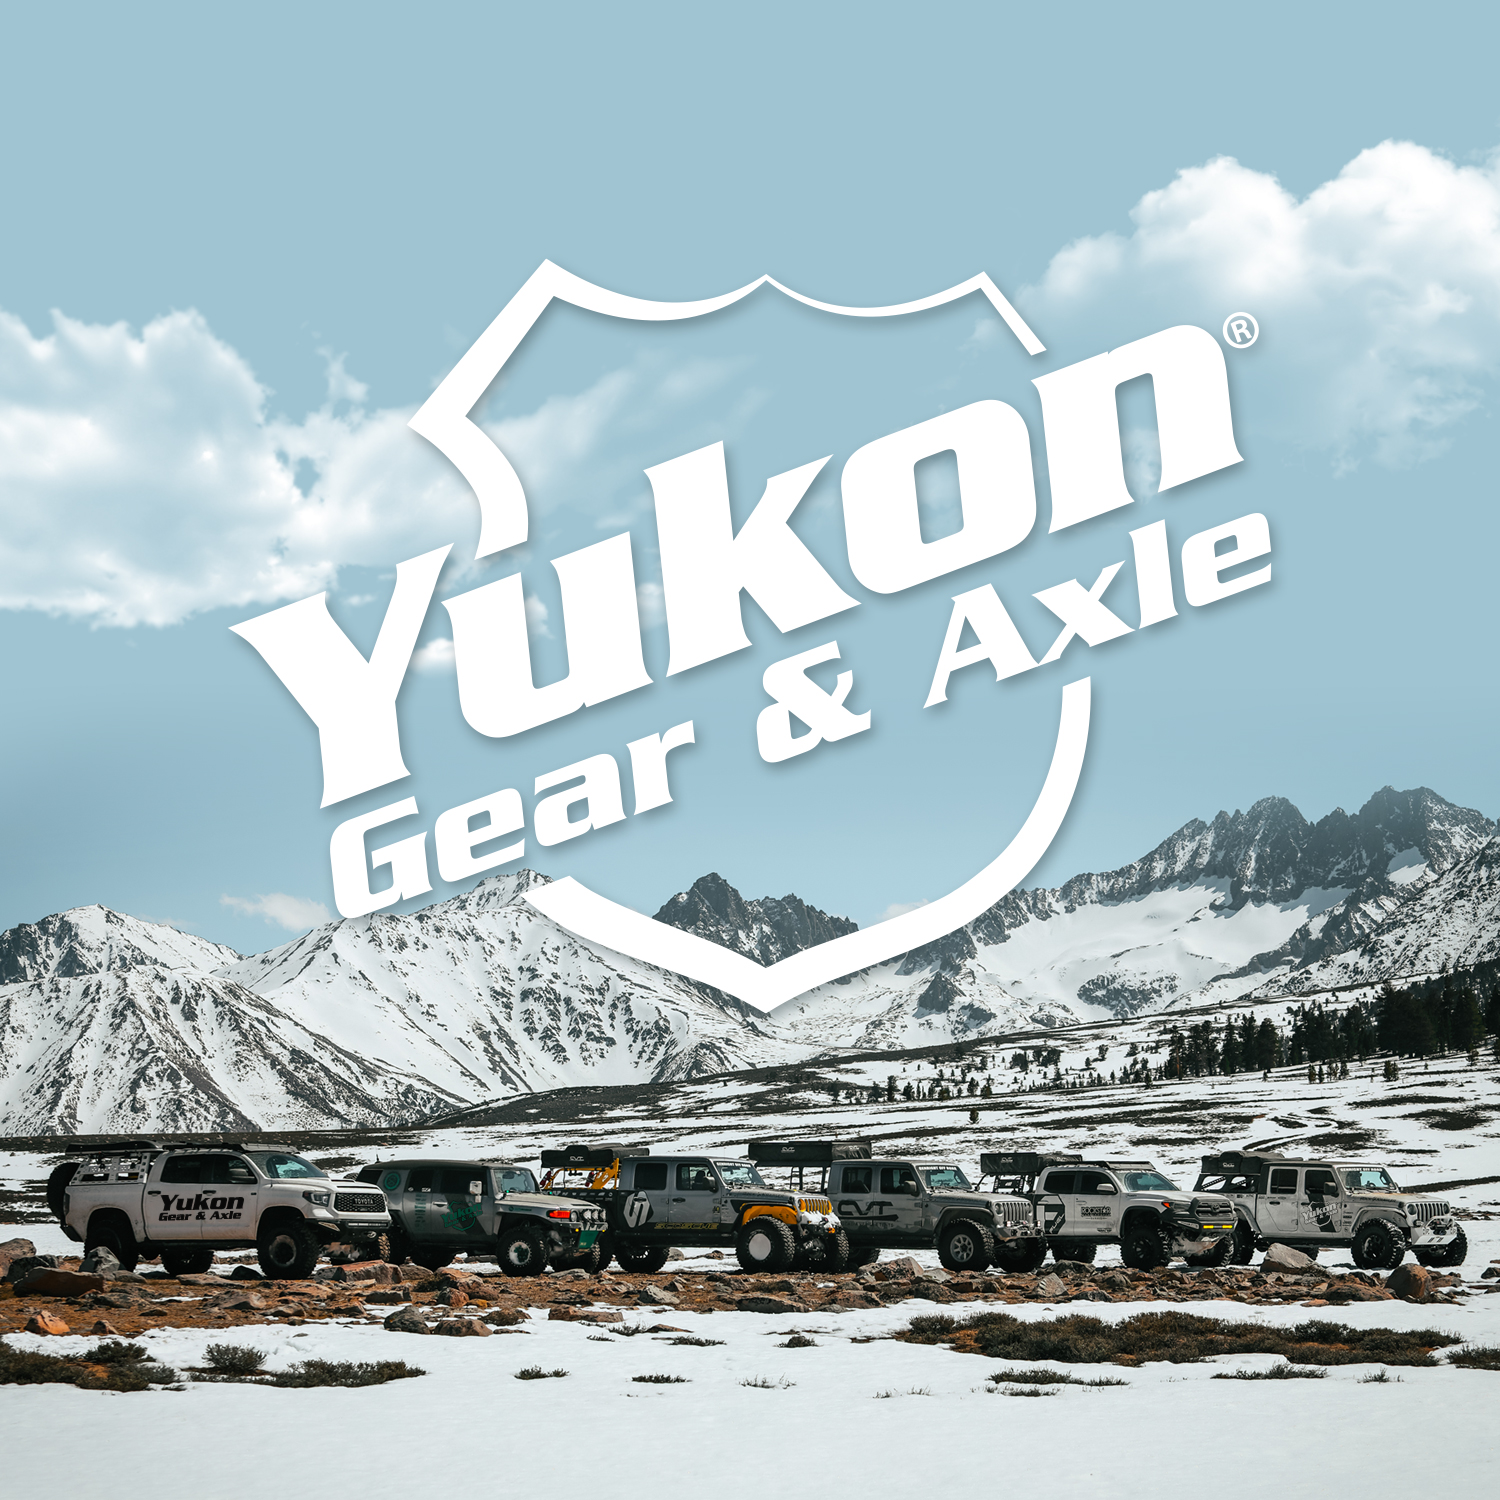 Yukon replacement standard open spider gear kit for Dana 70 with 32 spline axles